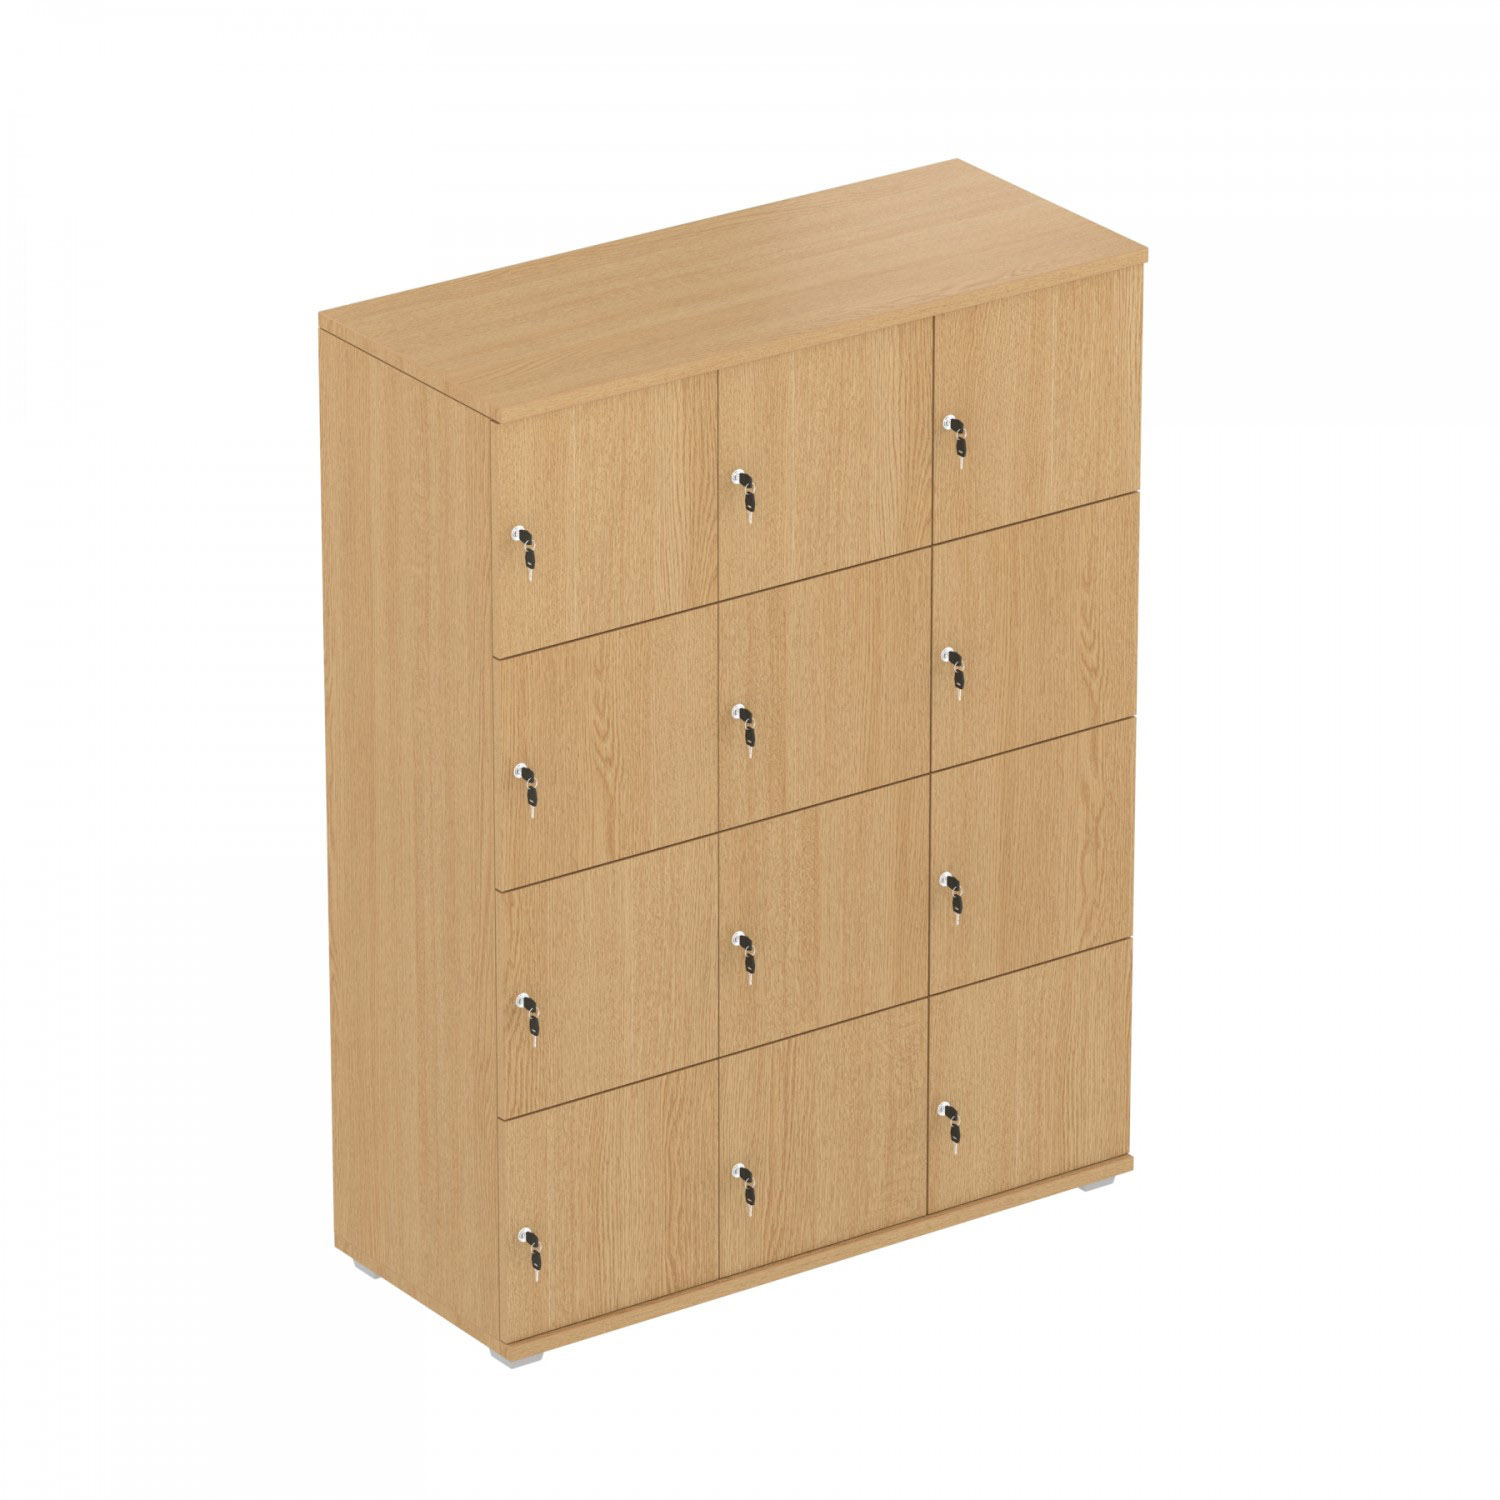 Triple Width Wooden Lockers Furniture For Schools